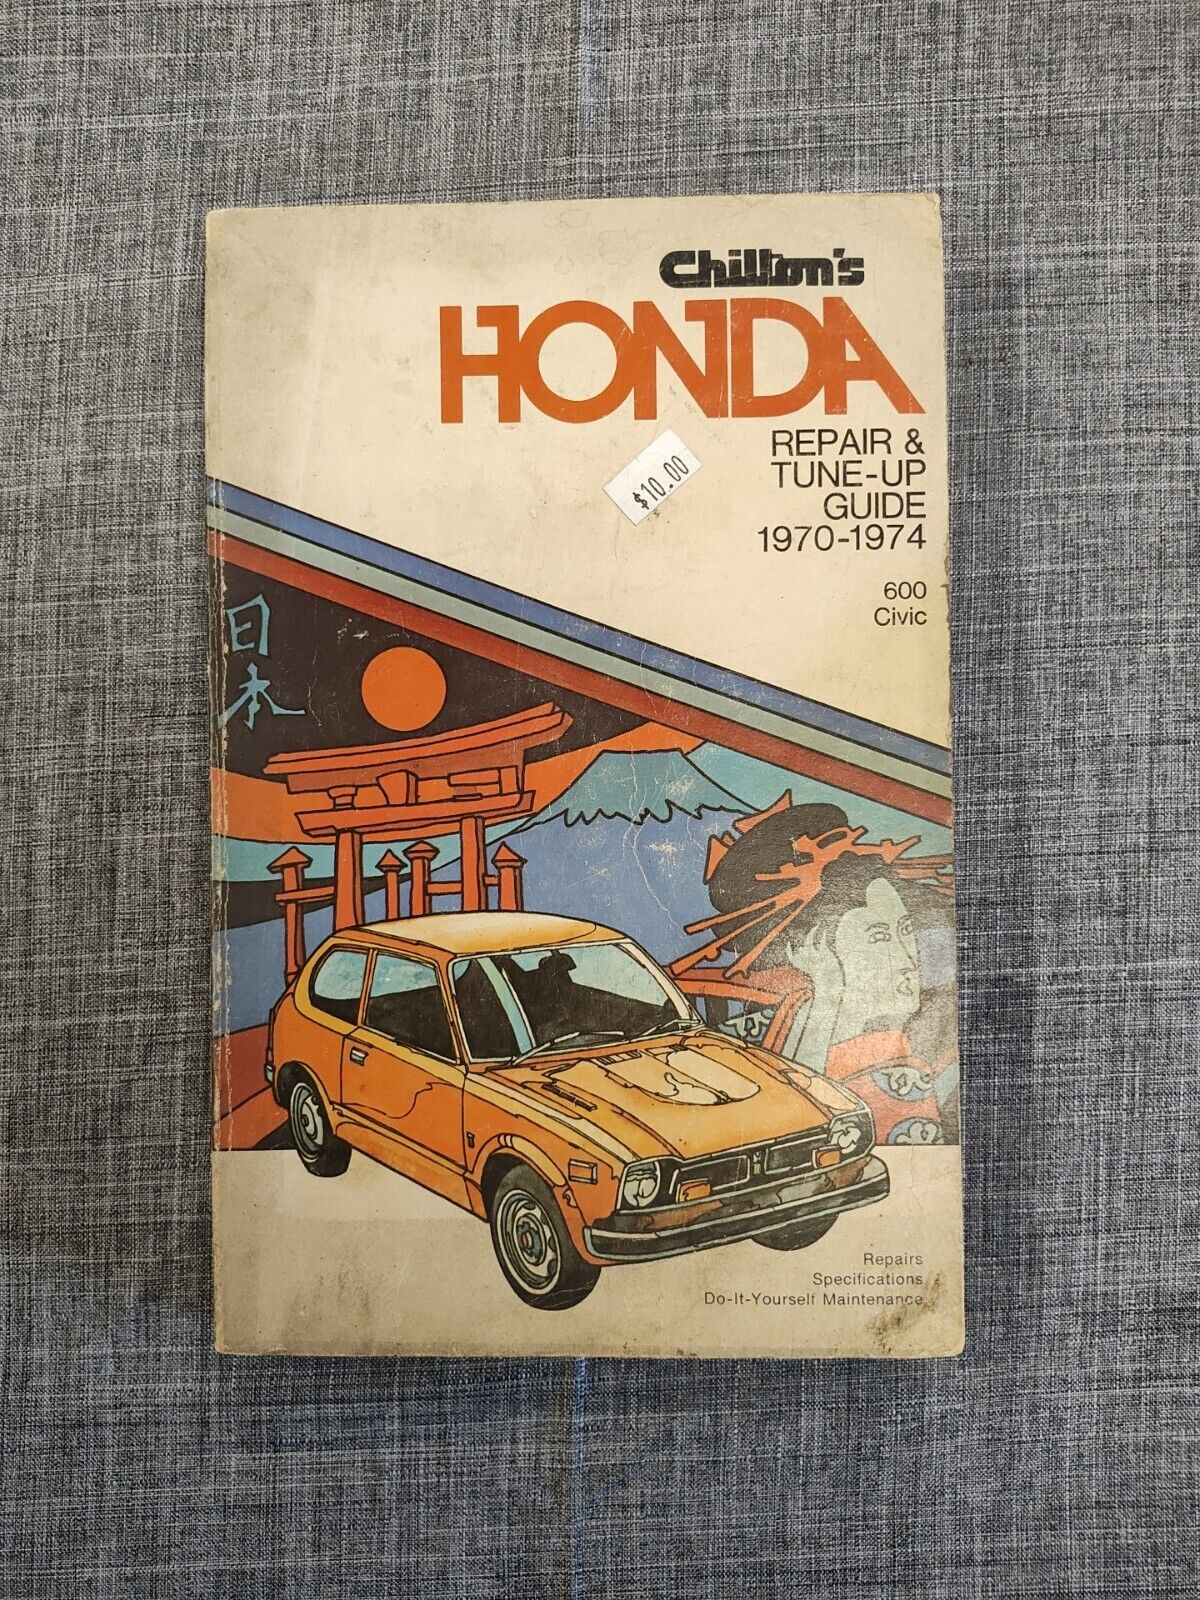 Vintage Chilton's Honda 1970-74 Repair & Tune-Up Guide 600 Civic